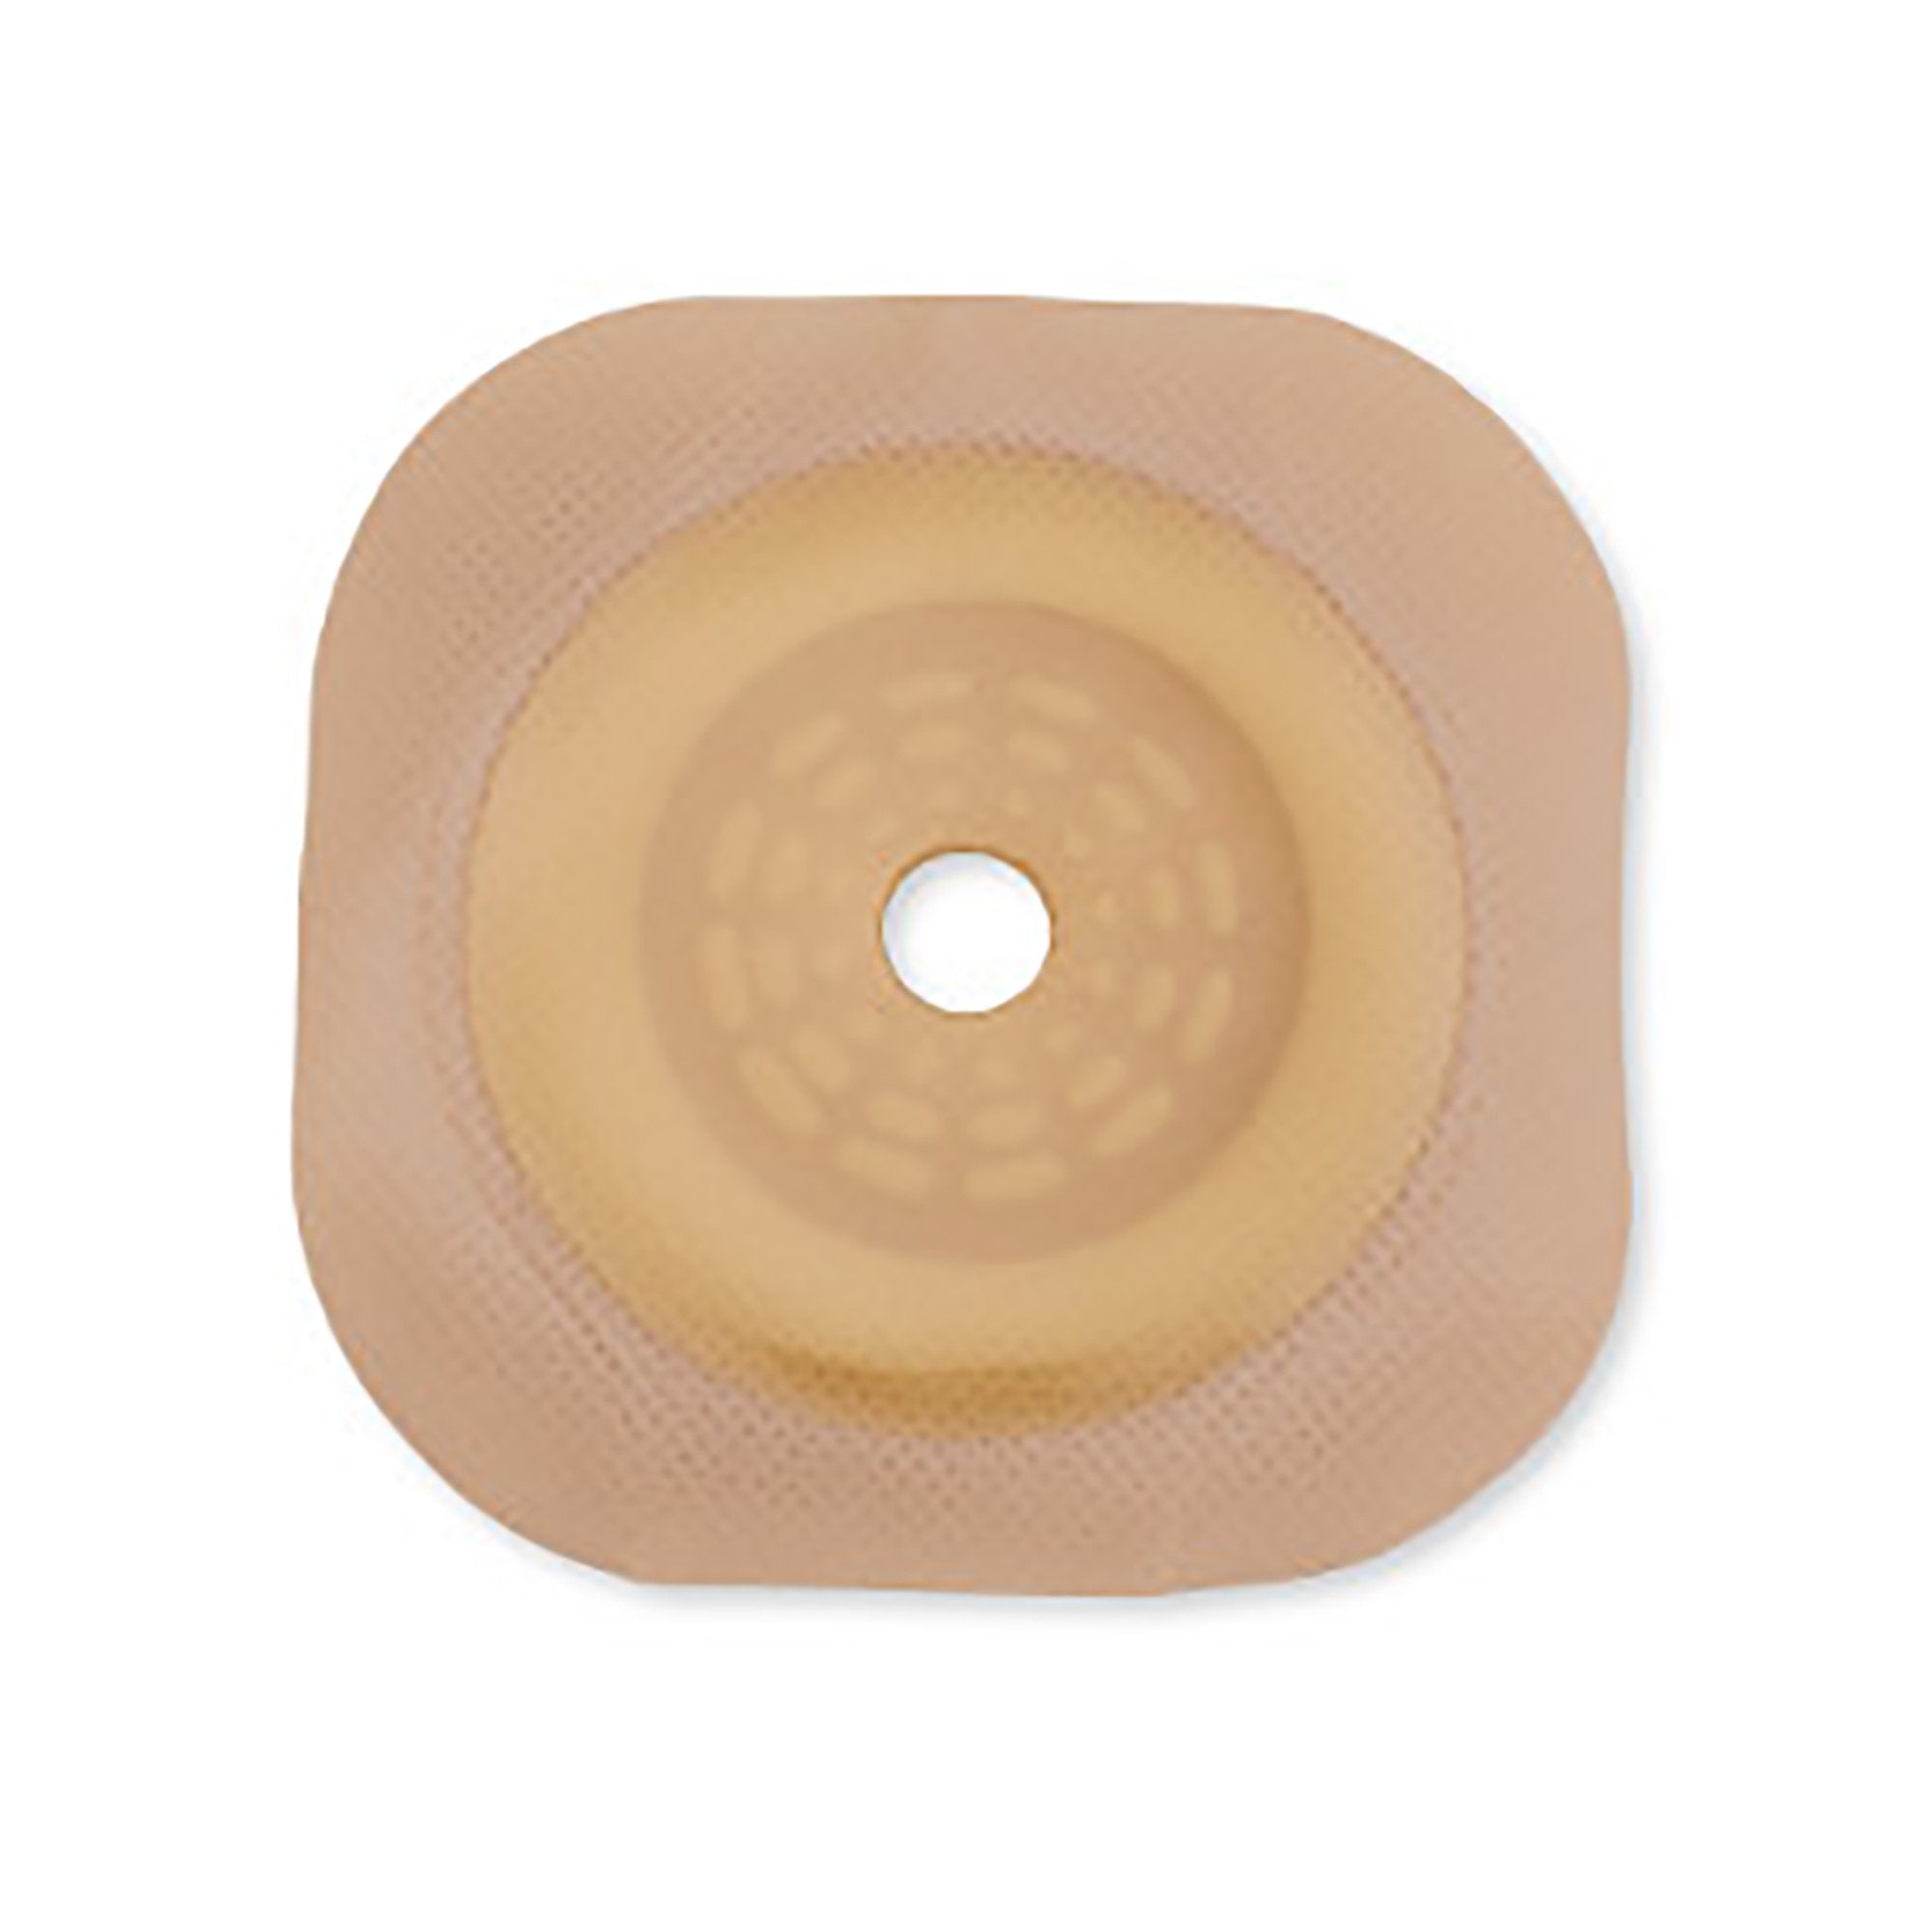 New Image Flat CeraPlus Skin Barrier, Extended Wear, Beige, 2.25" Flange, 1.75" Opening (1 Unit)